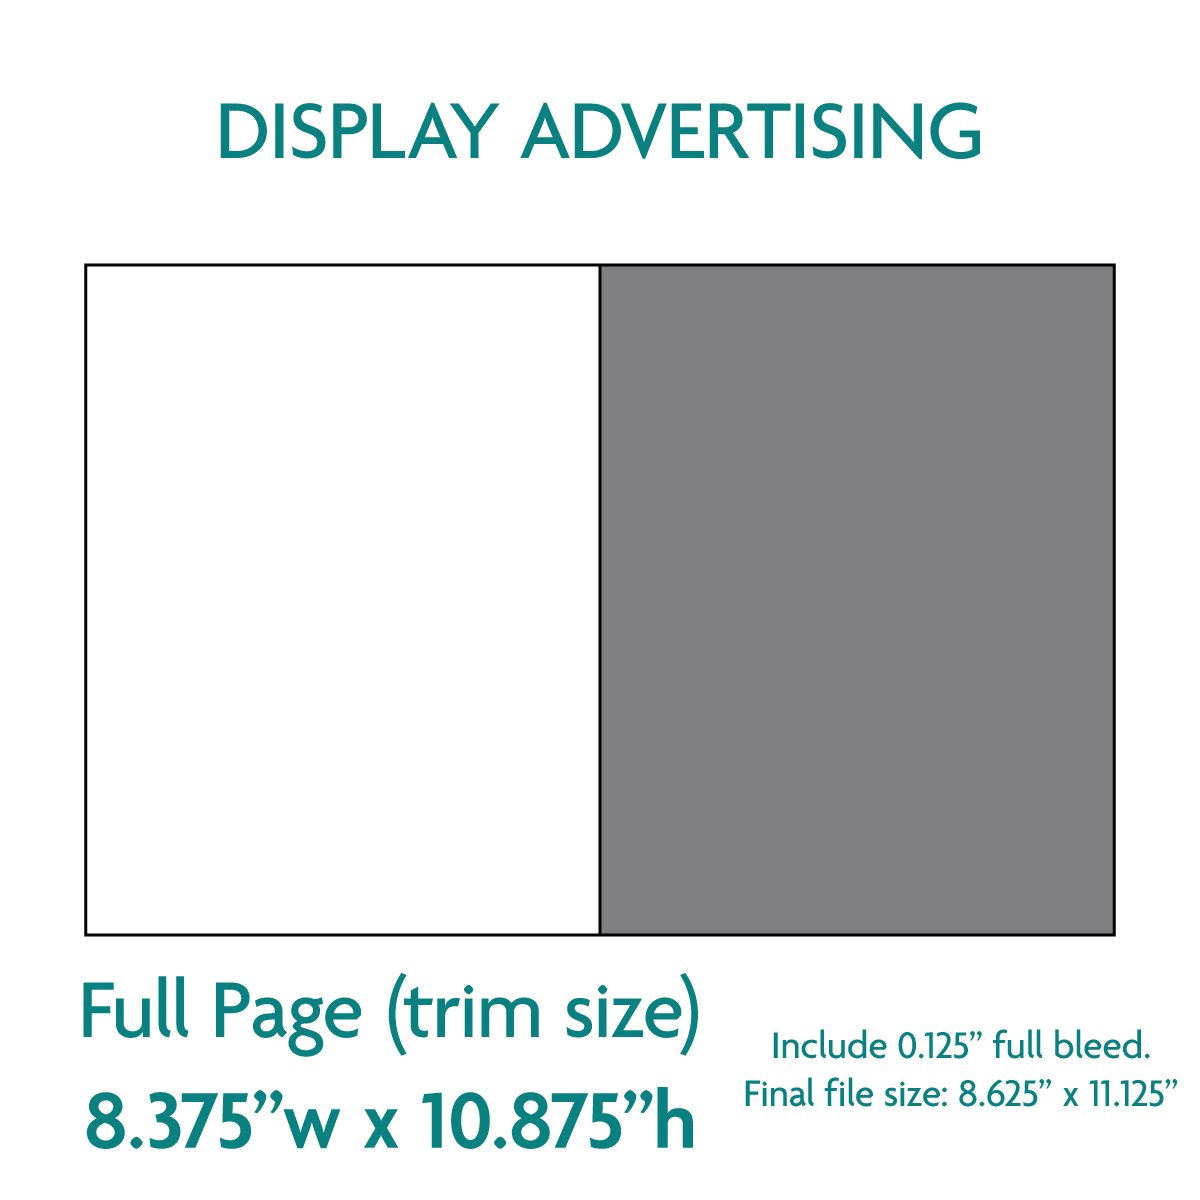 2024 Gallery Guide Display Ads (Associate Member Rates)